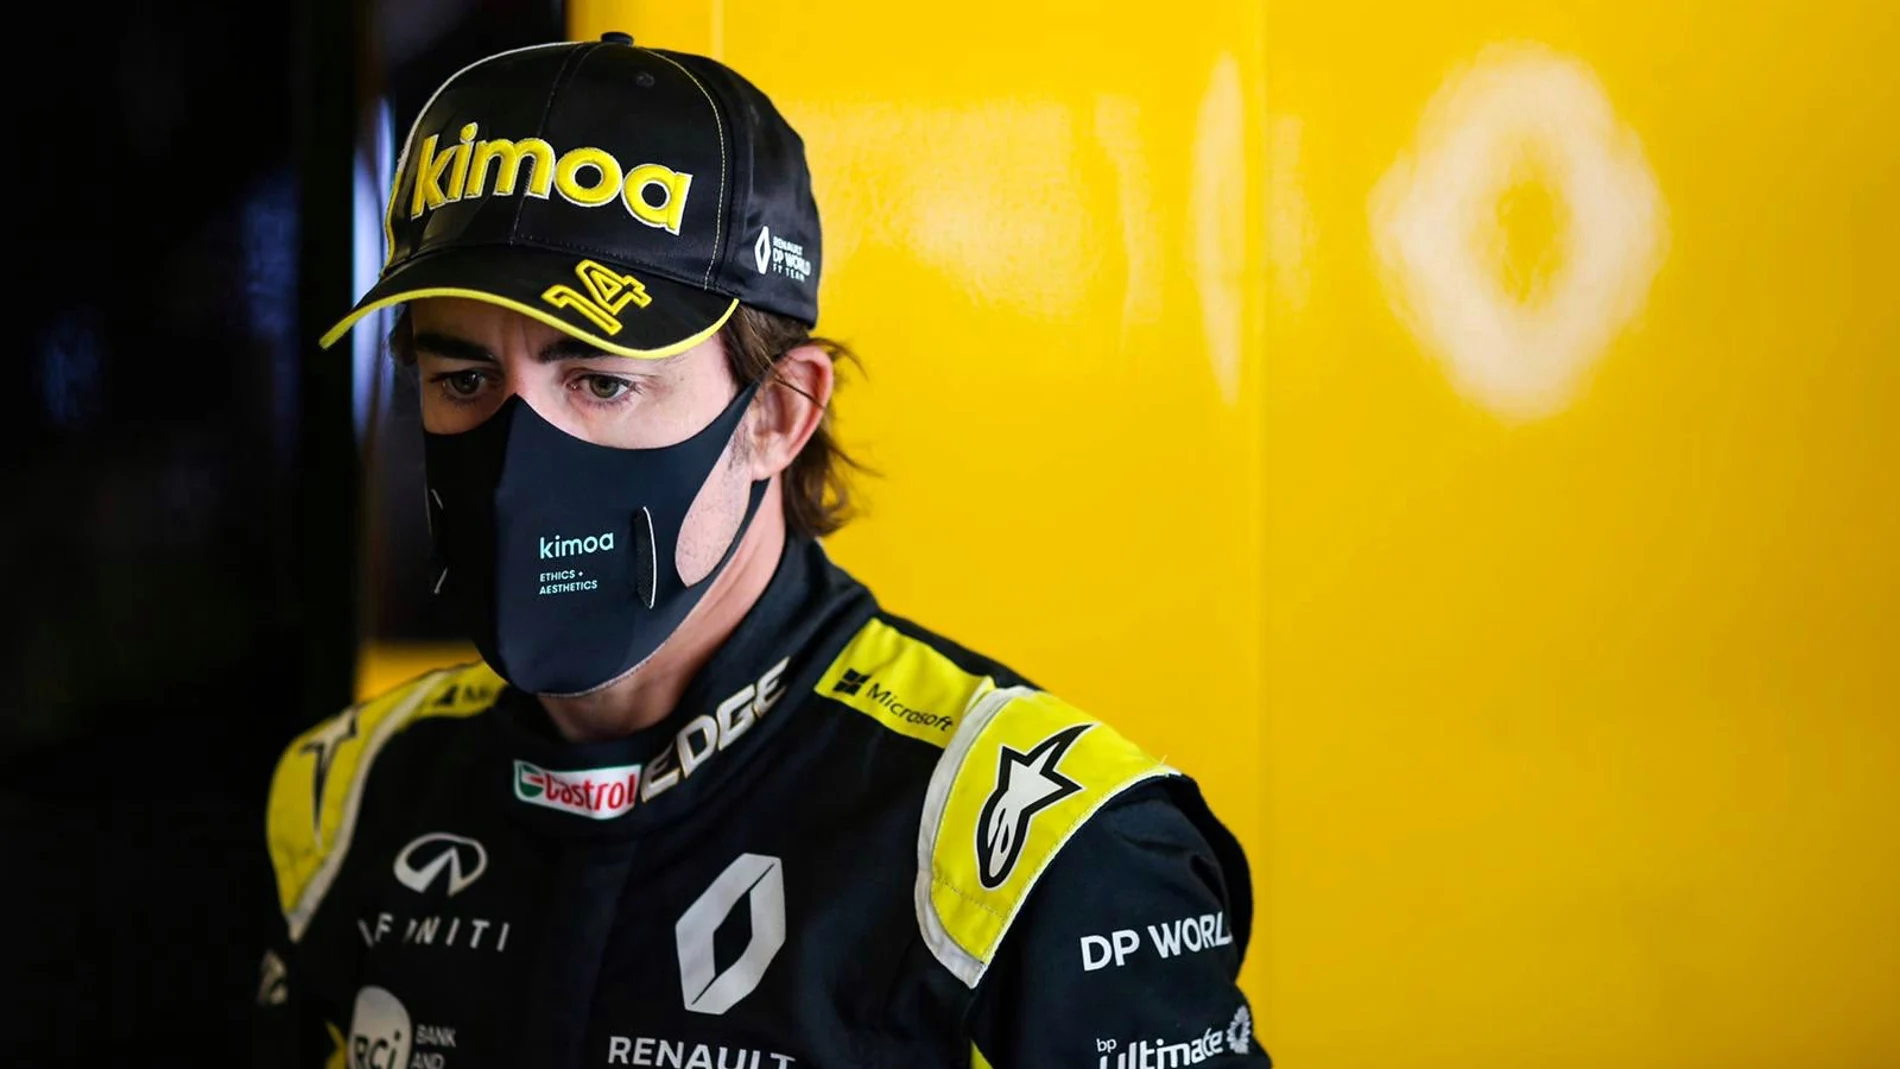  Fernando Alonso regresaba a Renault para 2021 